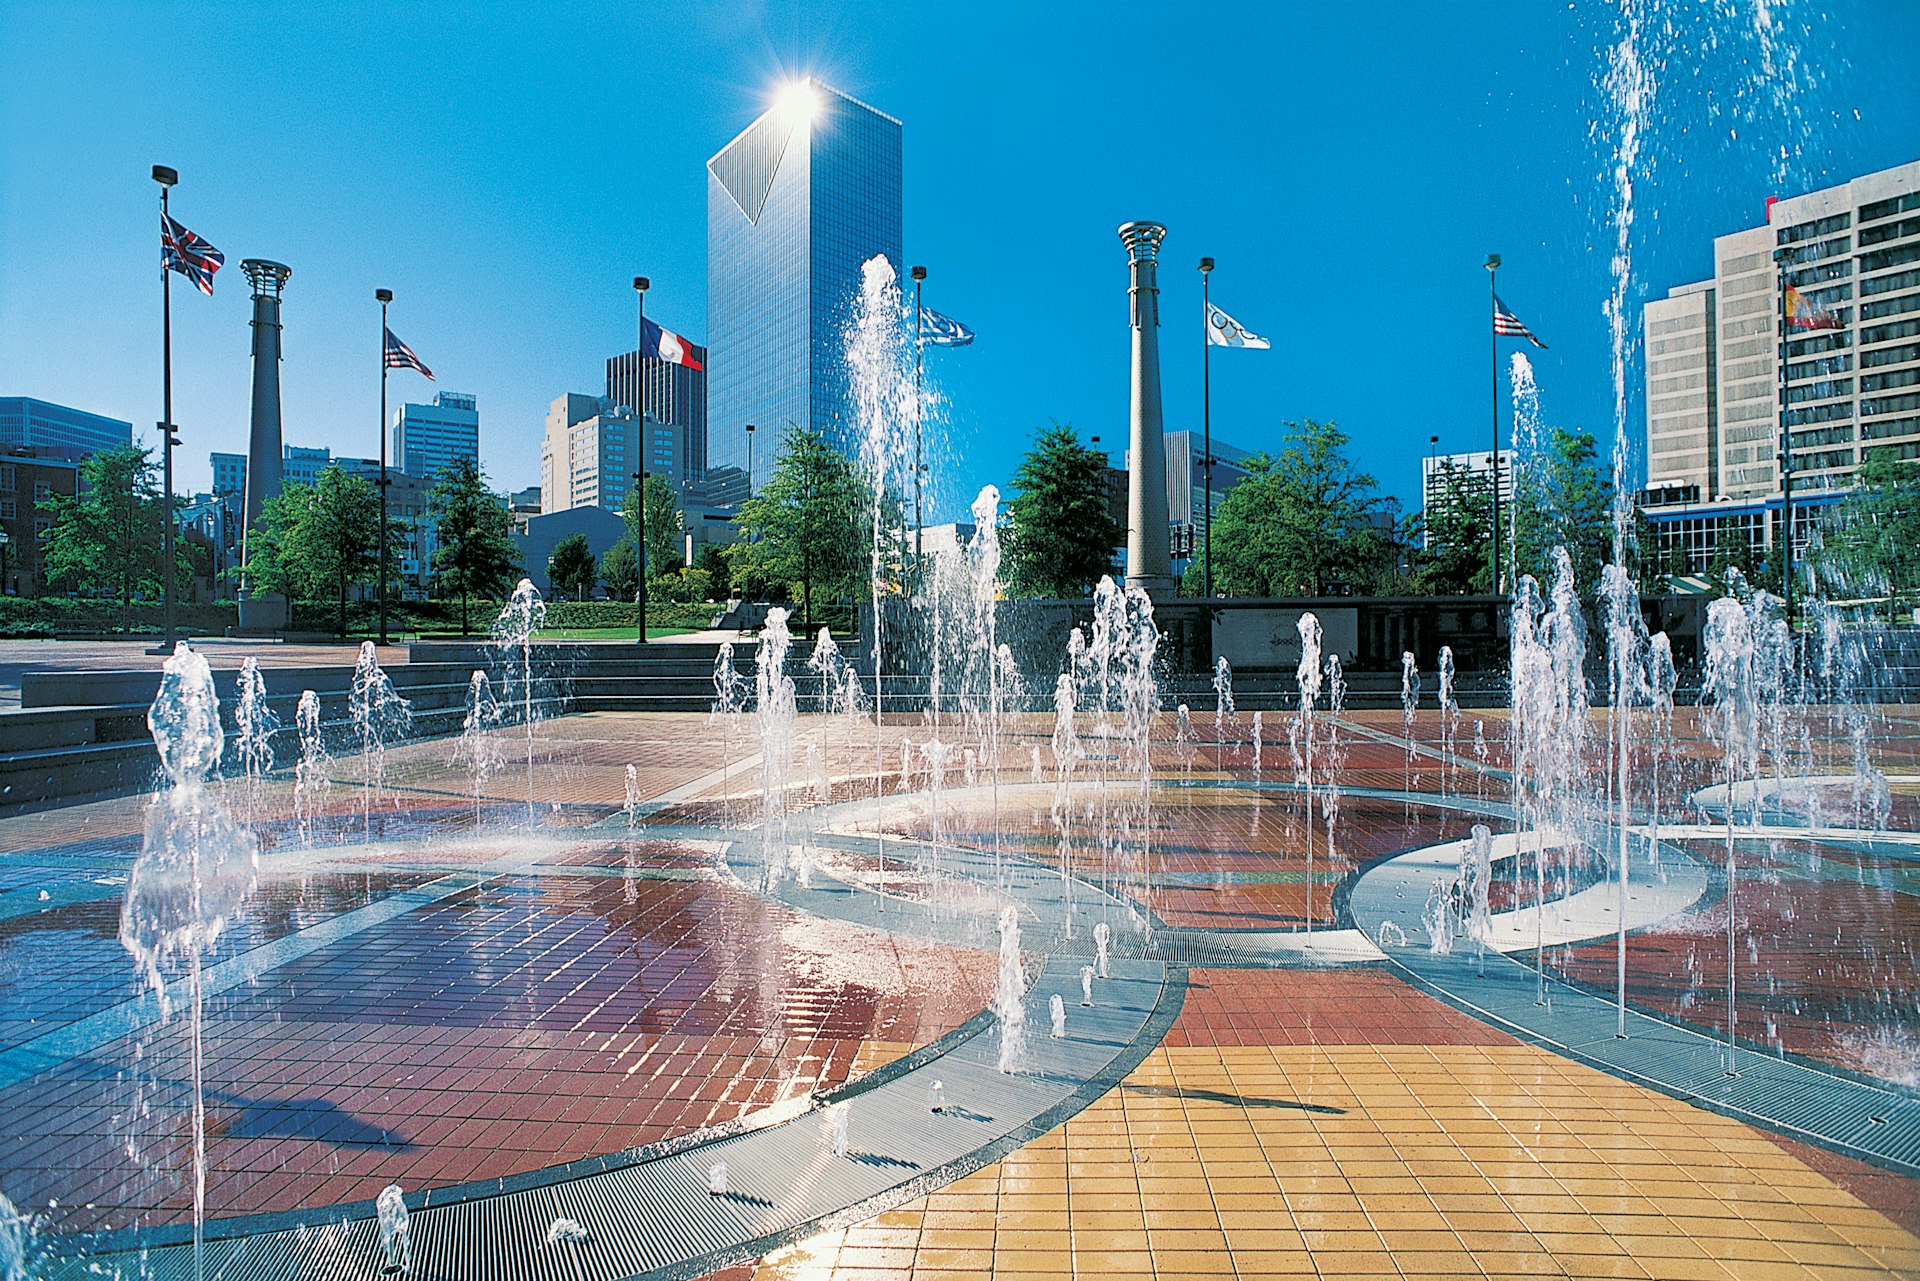 Water fountains at Centennial Park in Atlanta